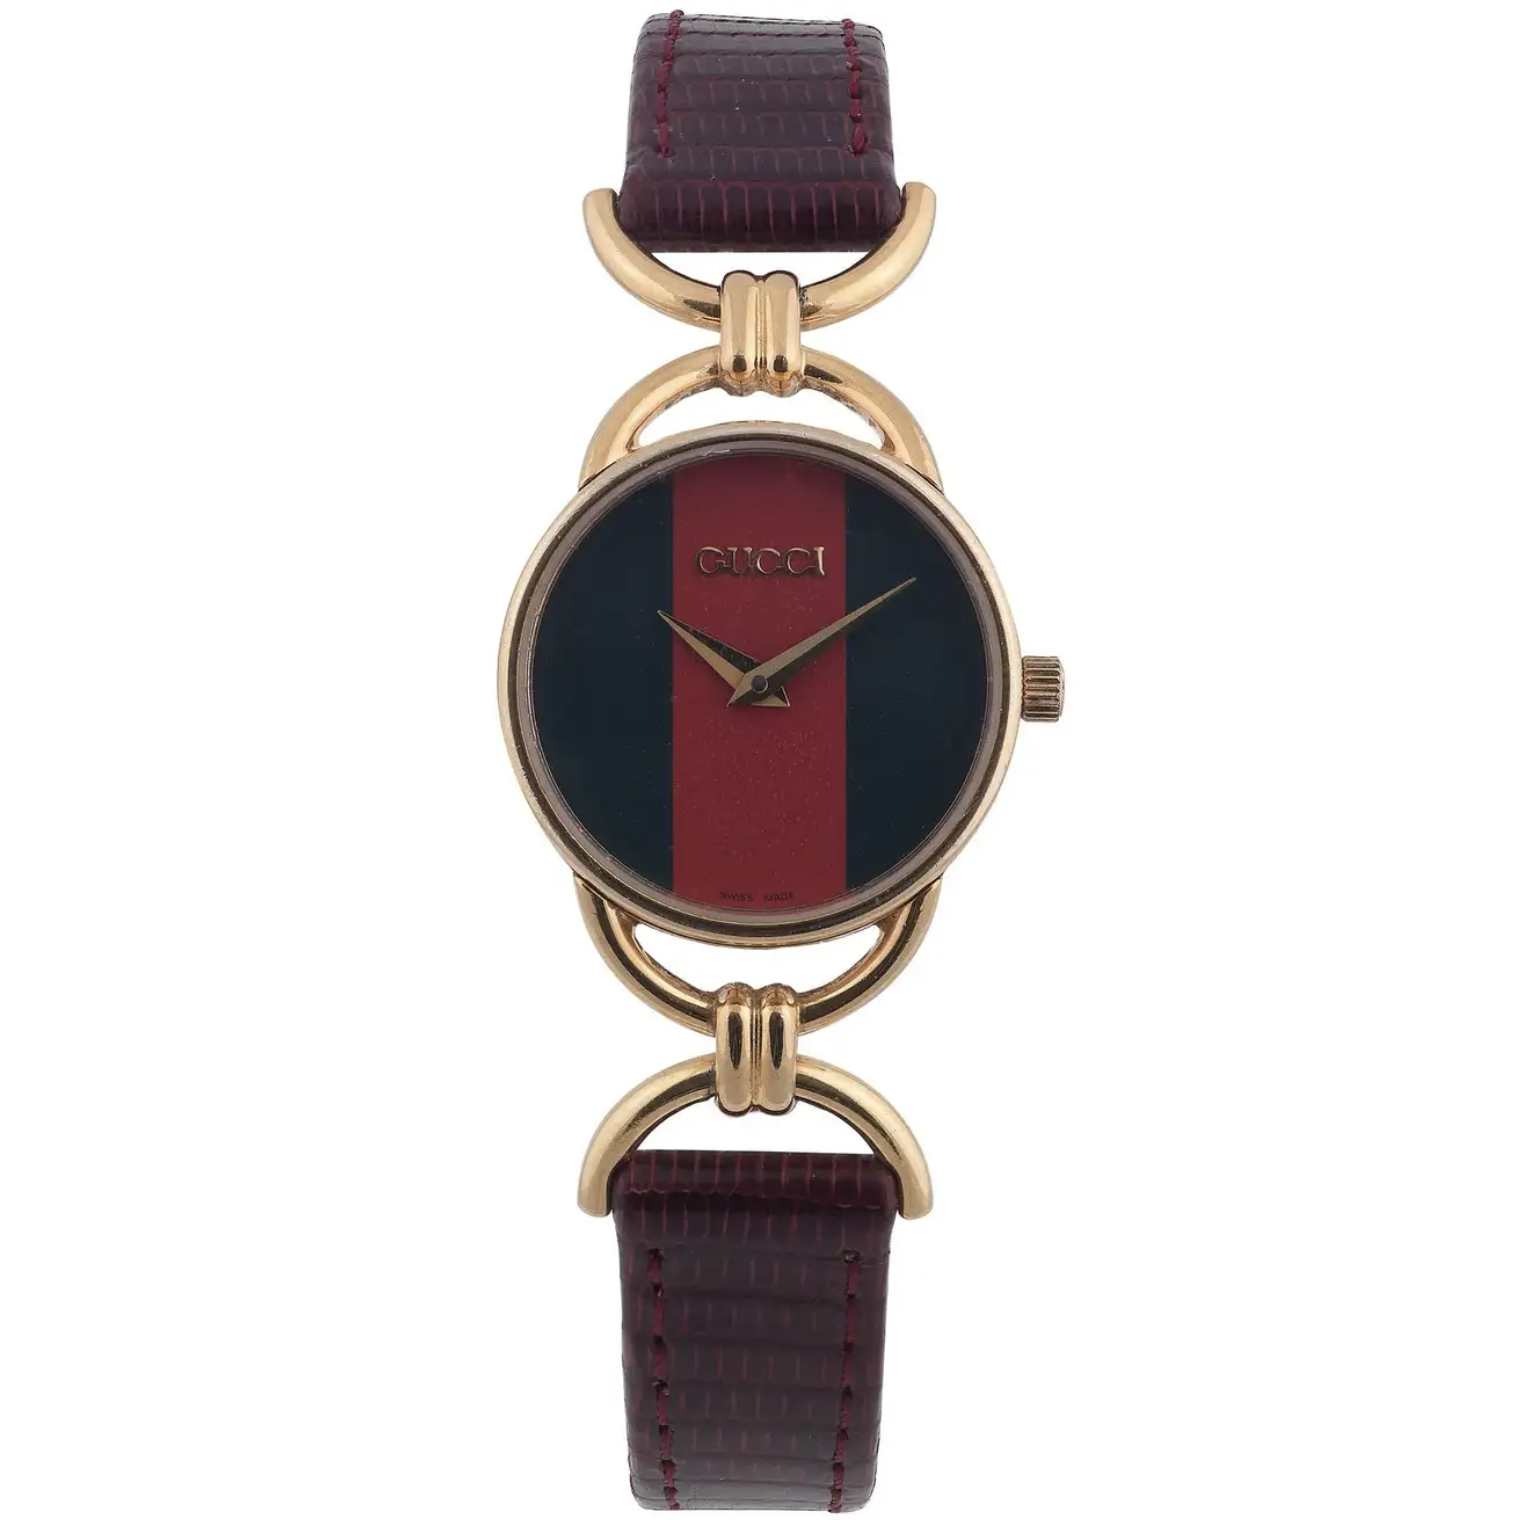 Details more than 80 gucci bracelet watch vintage - ceg.edu.vn